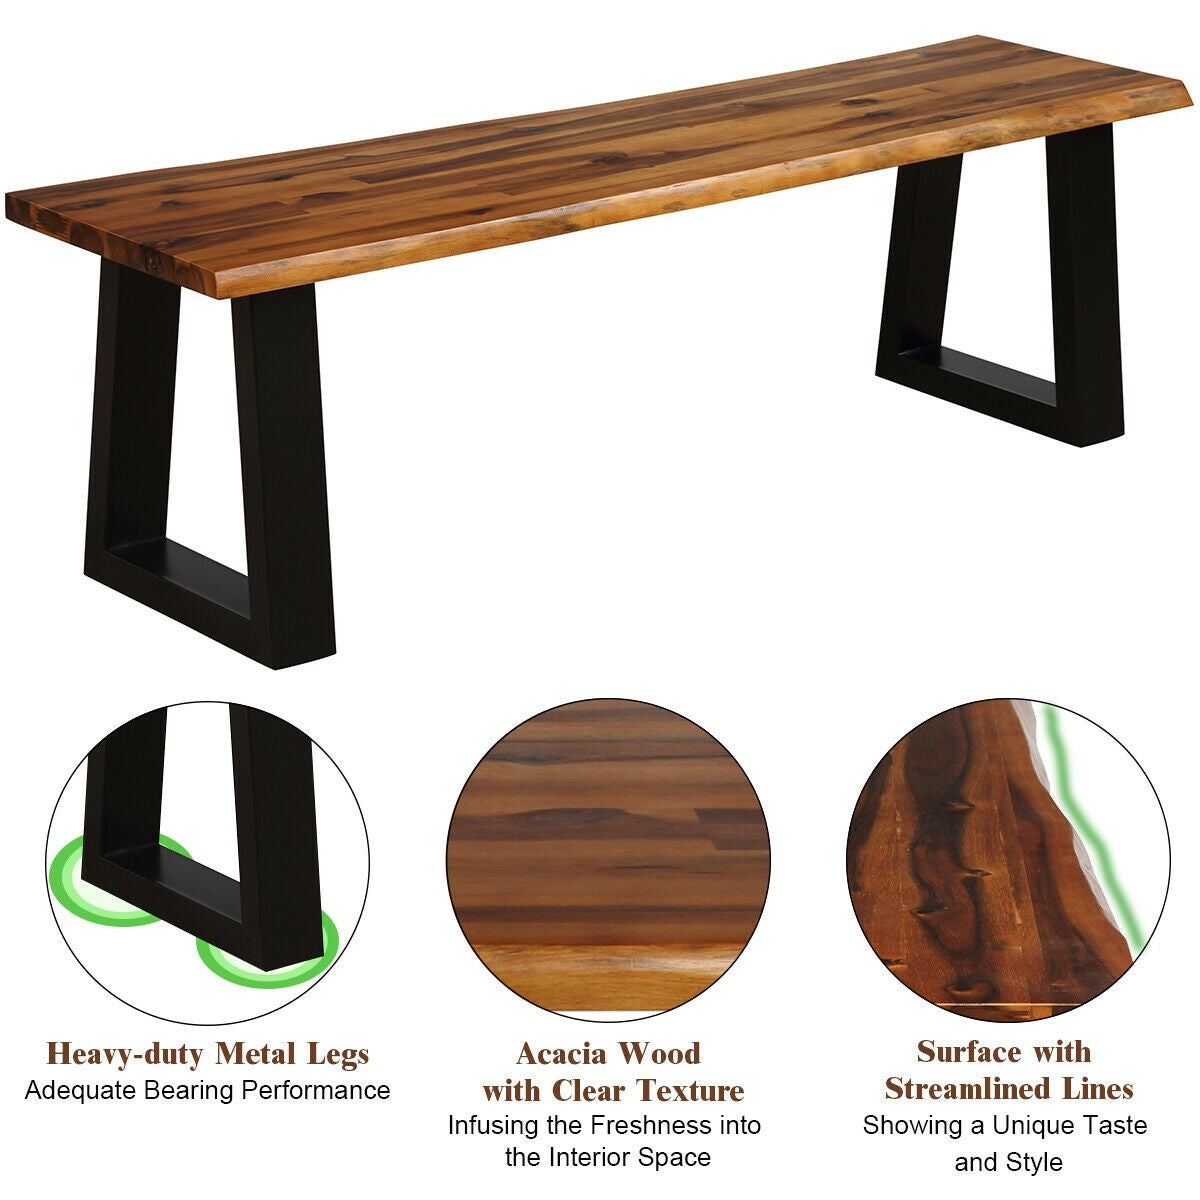 Giantex Wooden Dining Bench Seating Rustic Indoor &Outdoor Furniture (Rustic Brown&Black)